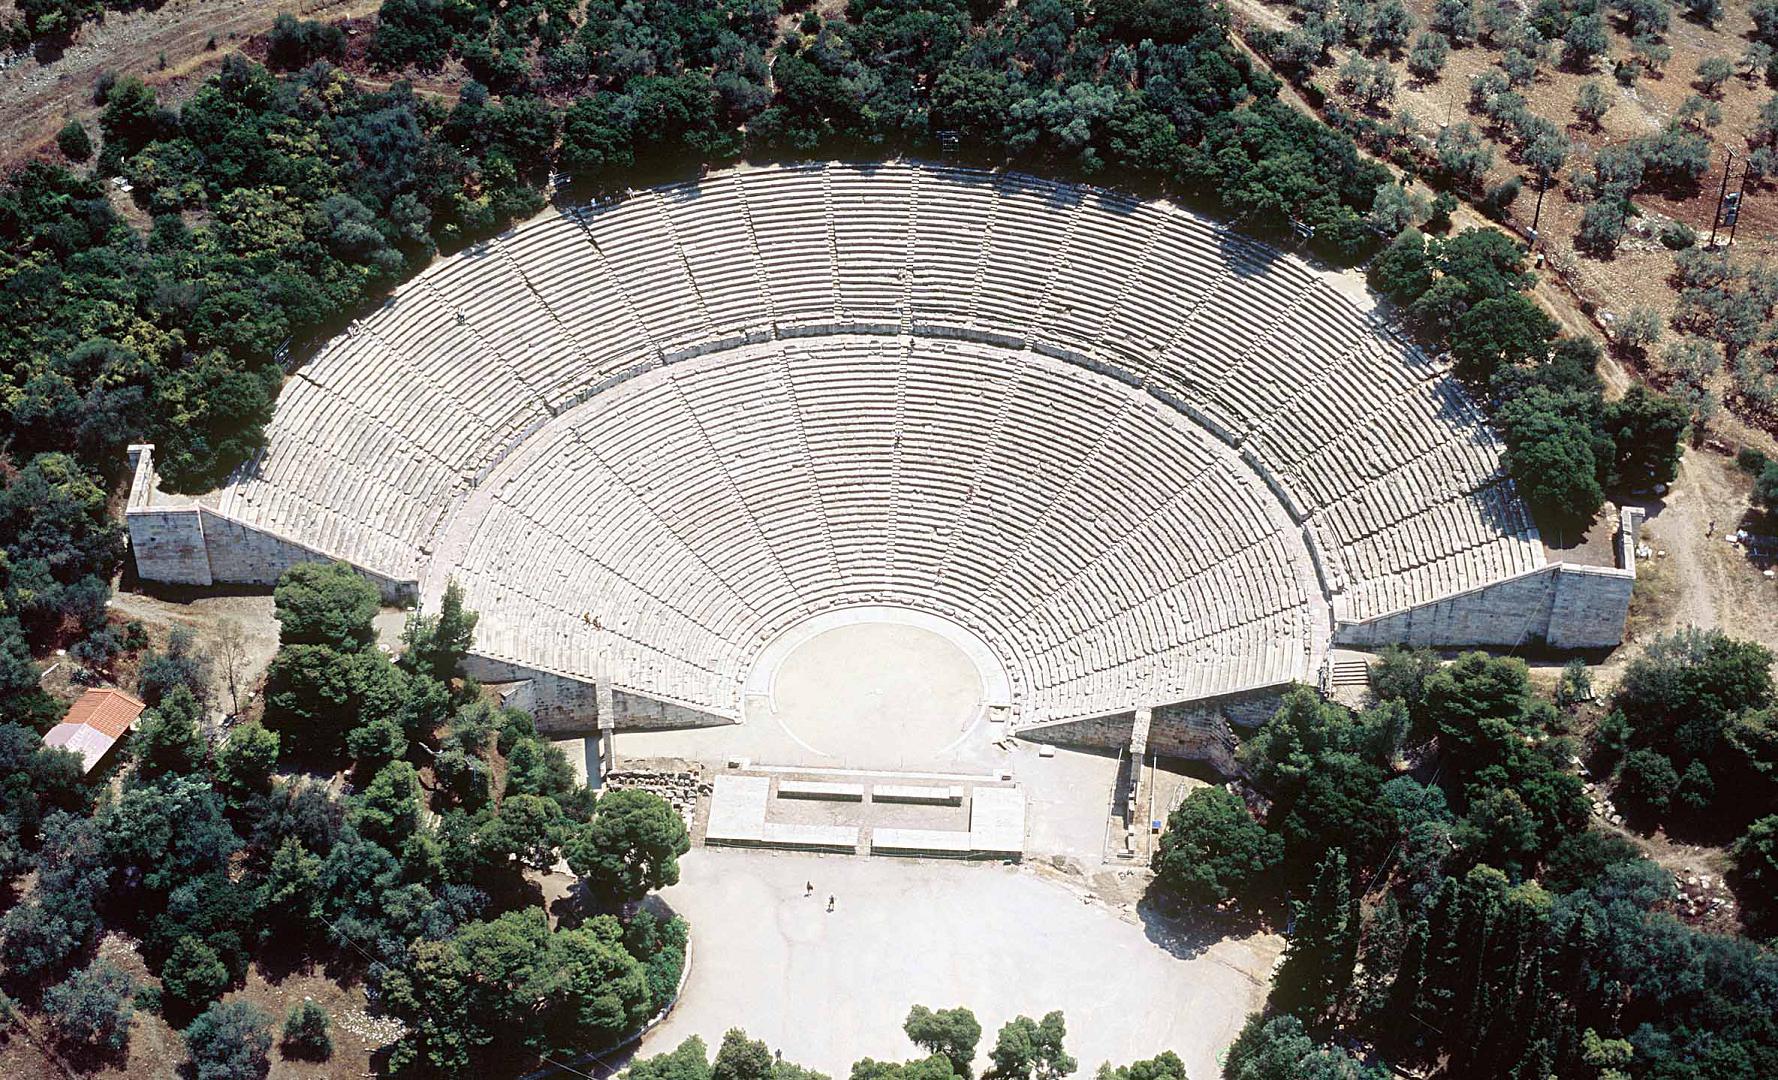 Sanctuary of Asklepios